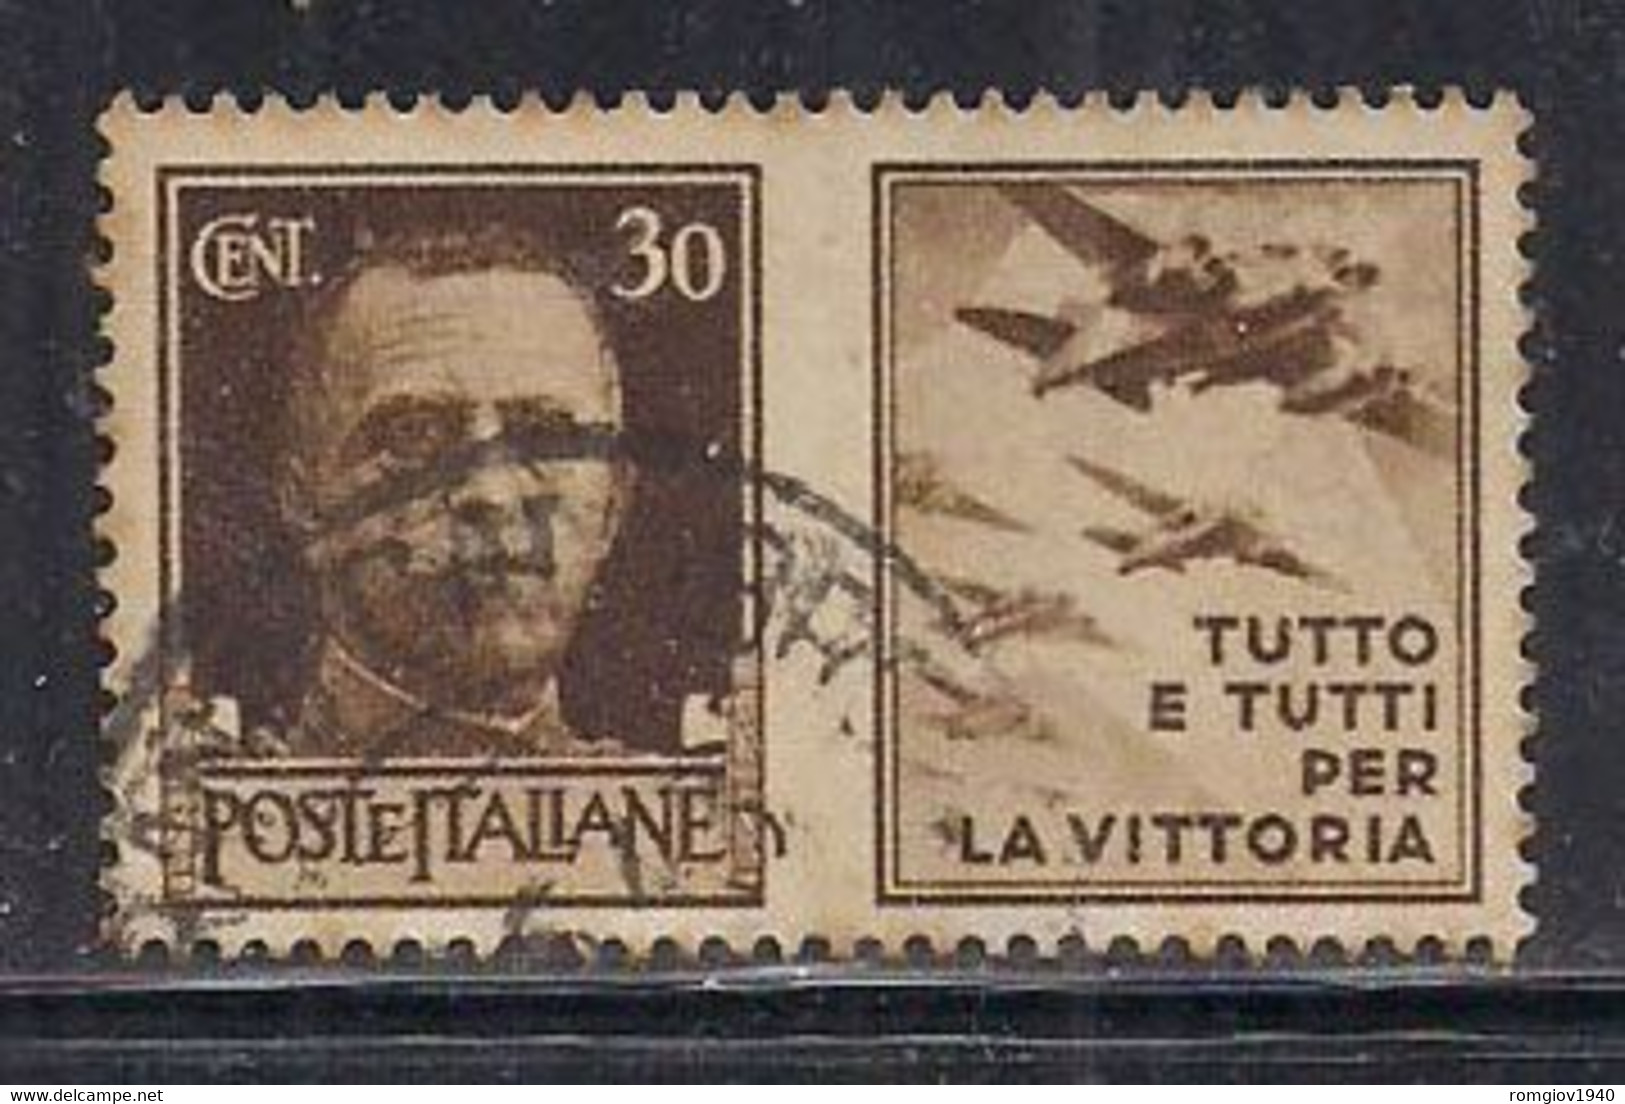 REGNO D'ITALIA 1942  PROPAGANDA DI GUERRA  SASS. 7 USATO VF - Pneumatische Post